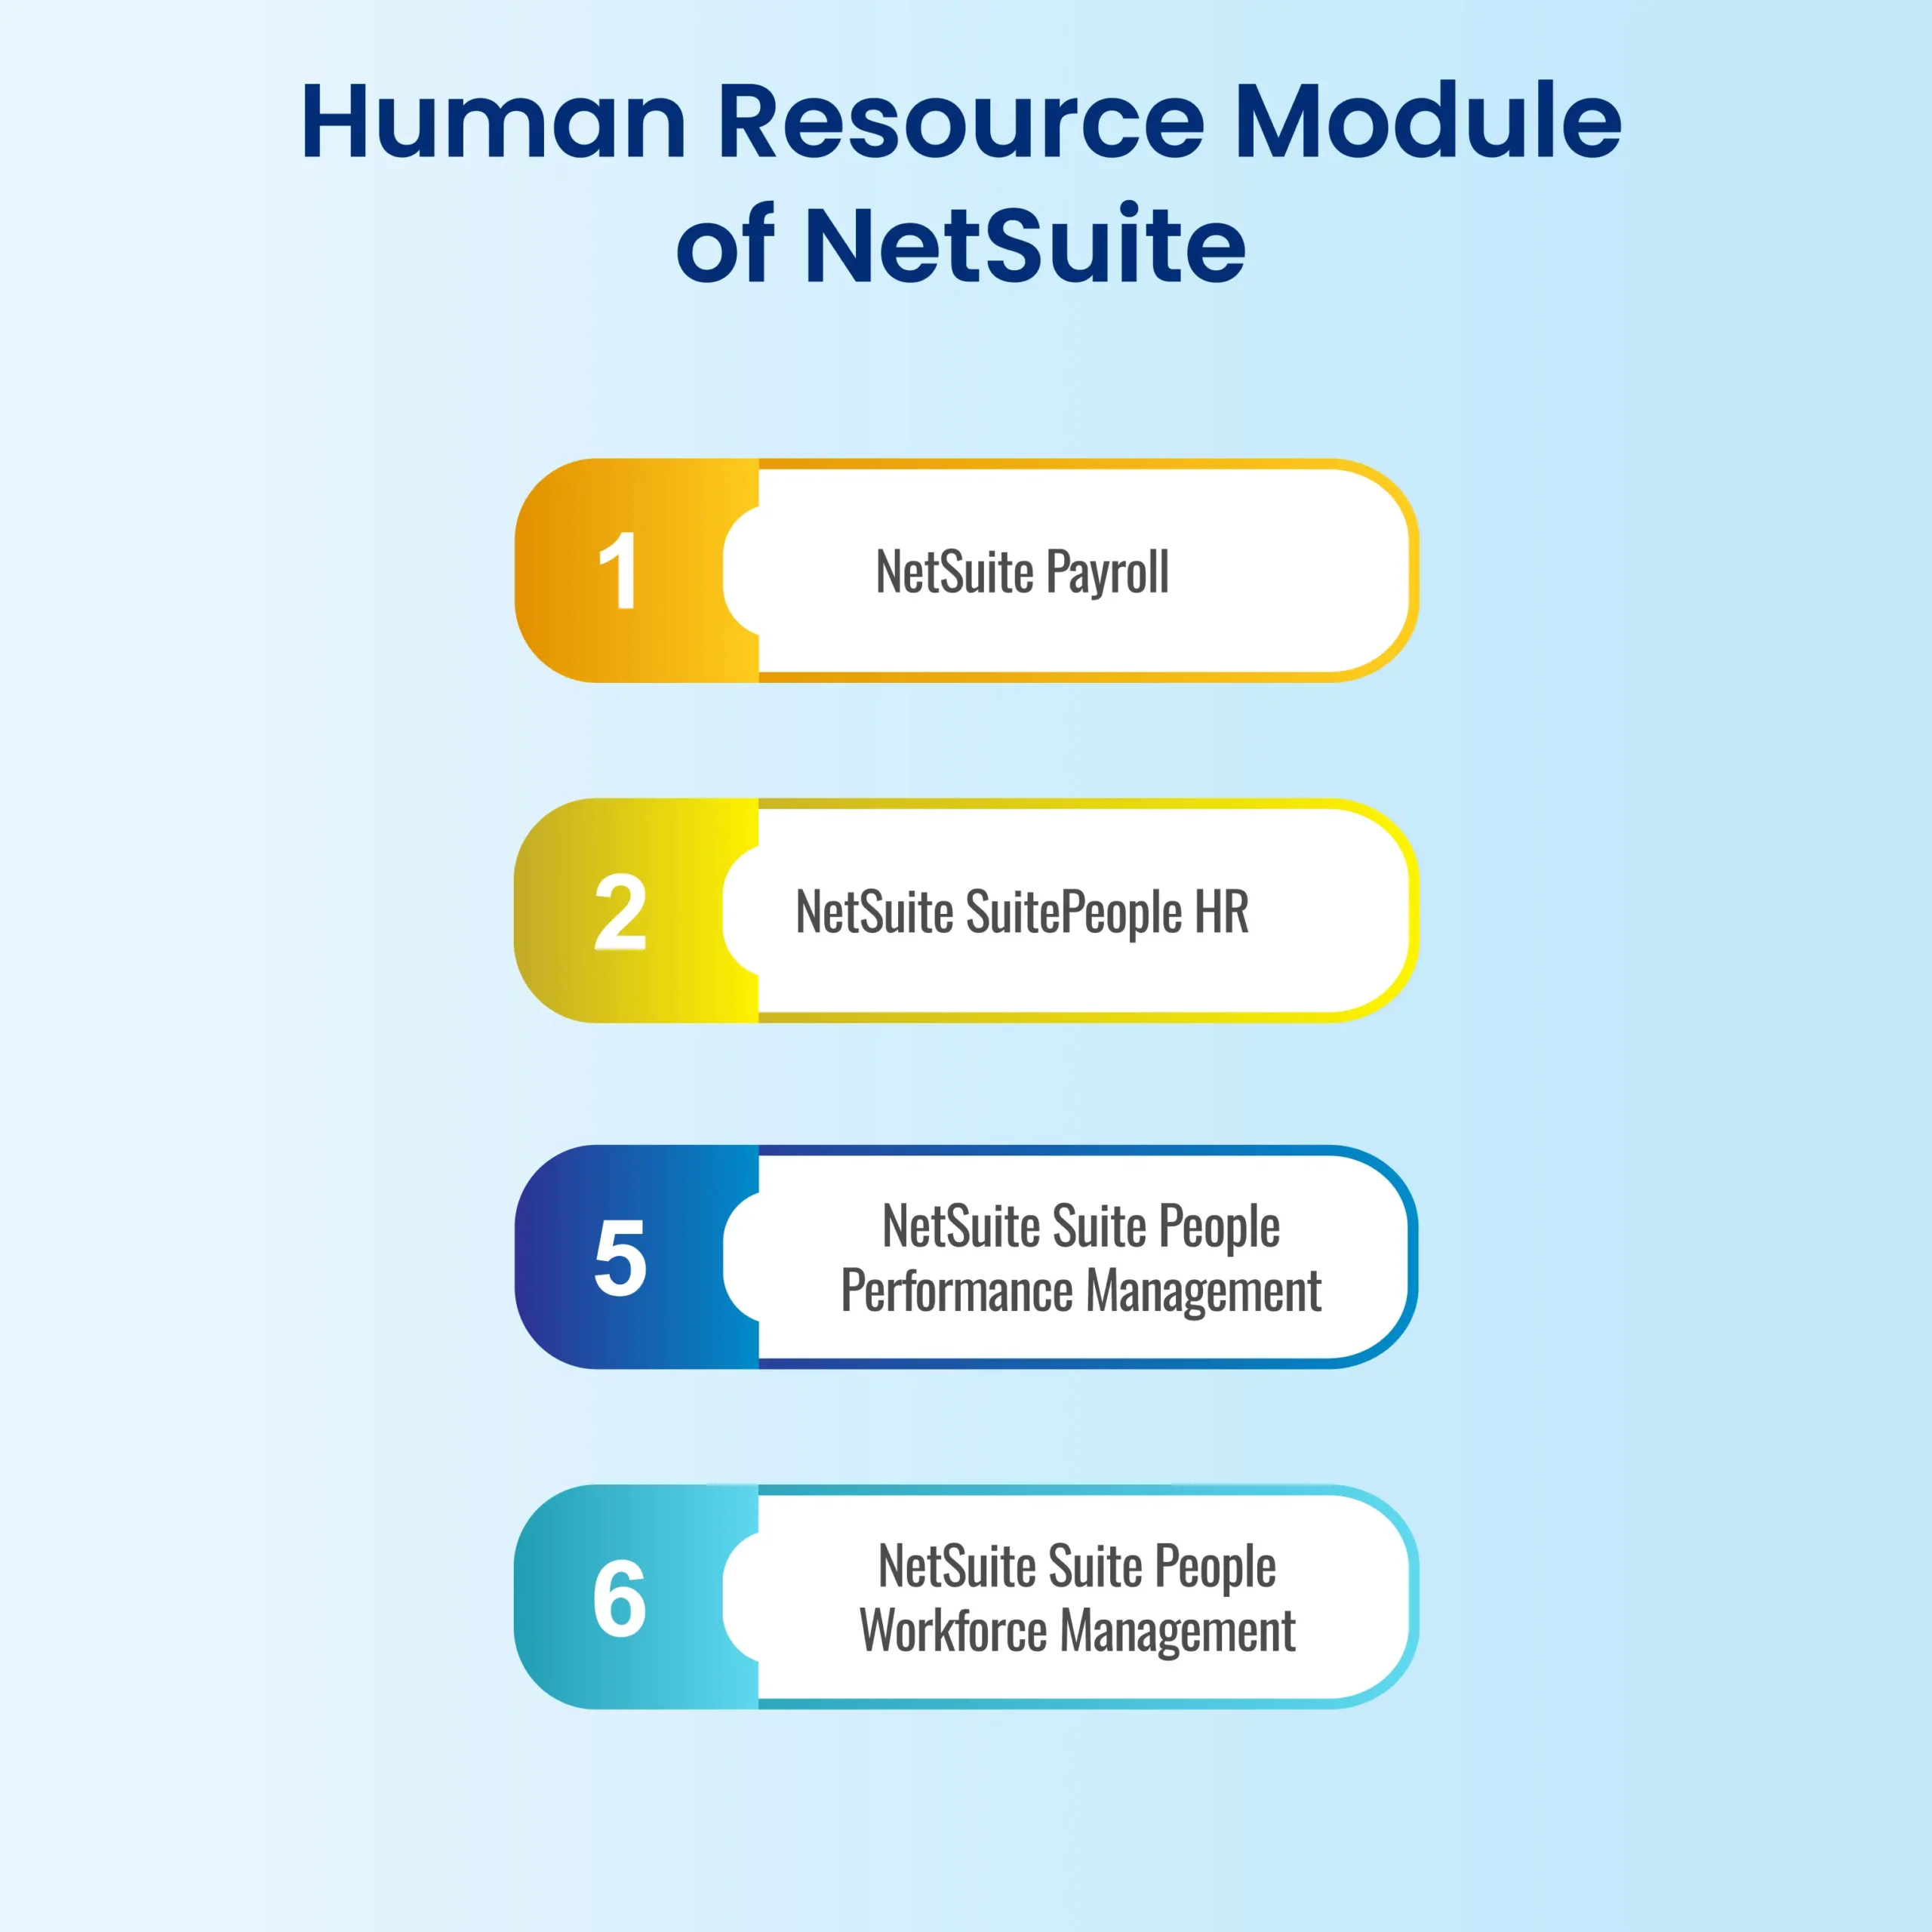 Human Resource Module of NetSuite